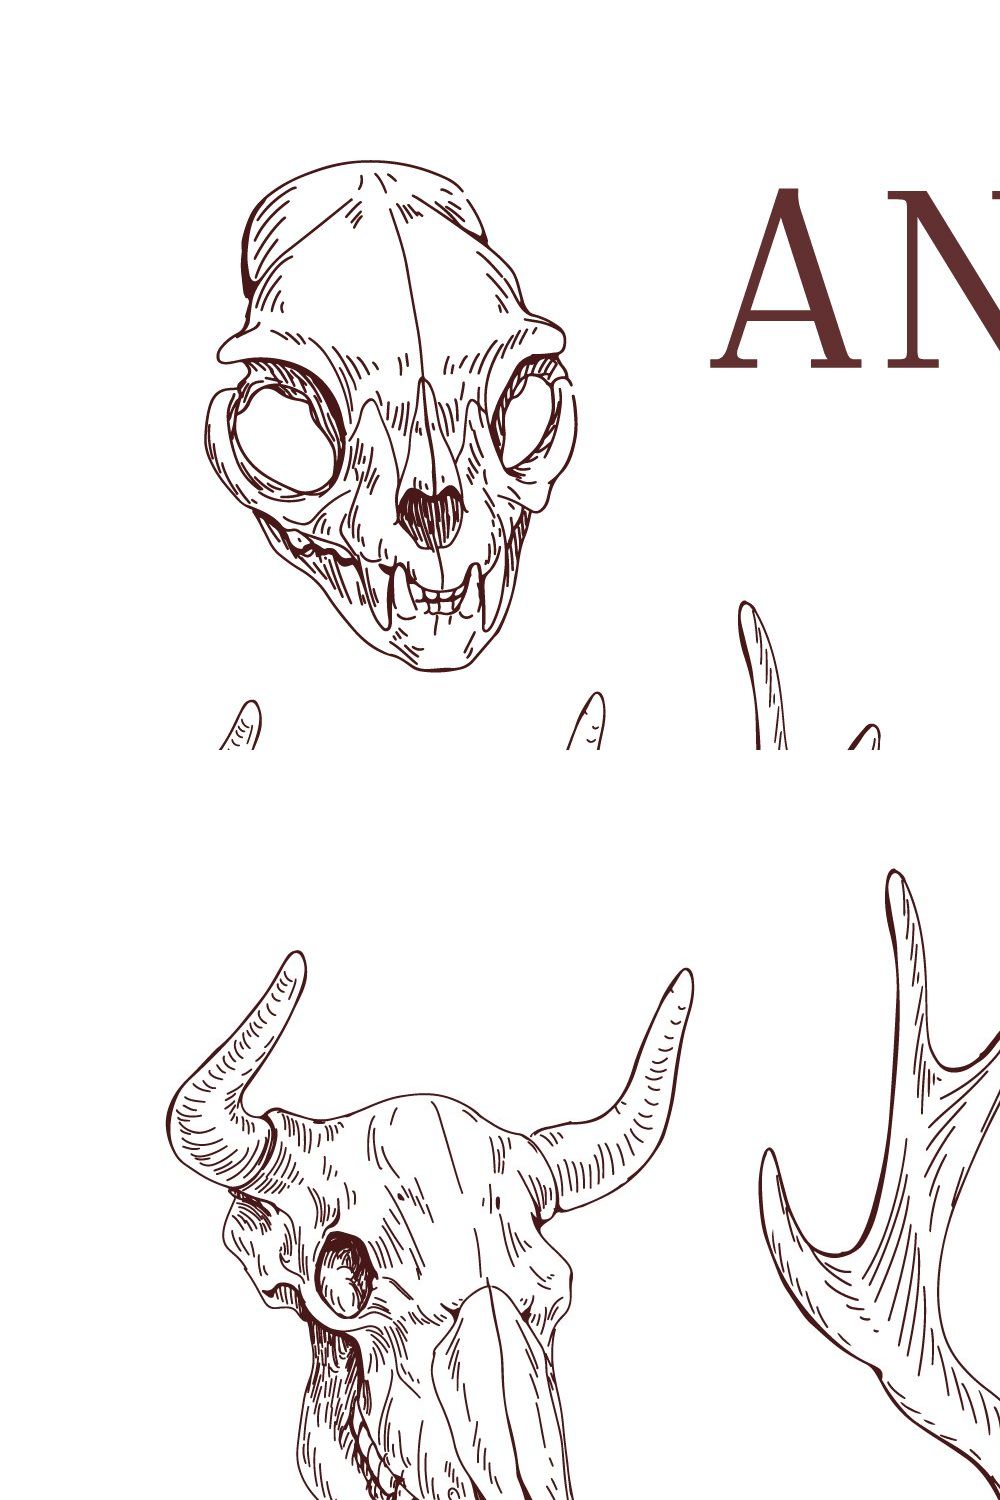 Hand drawn animal & bird skulls set pinterest preview image.